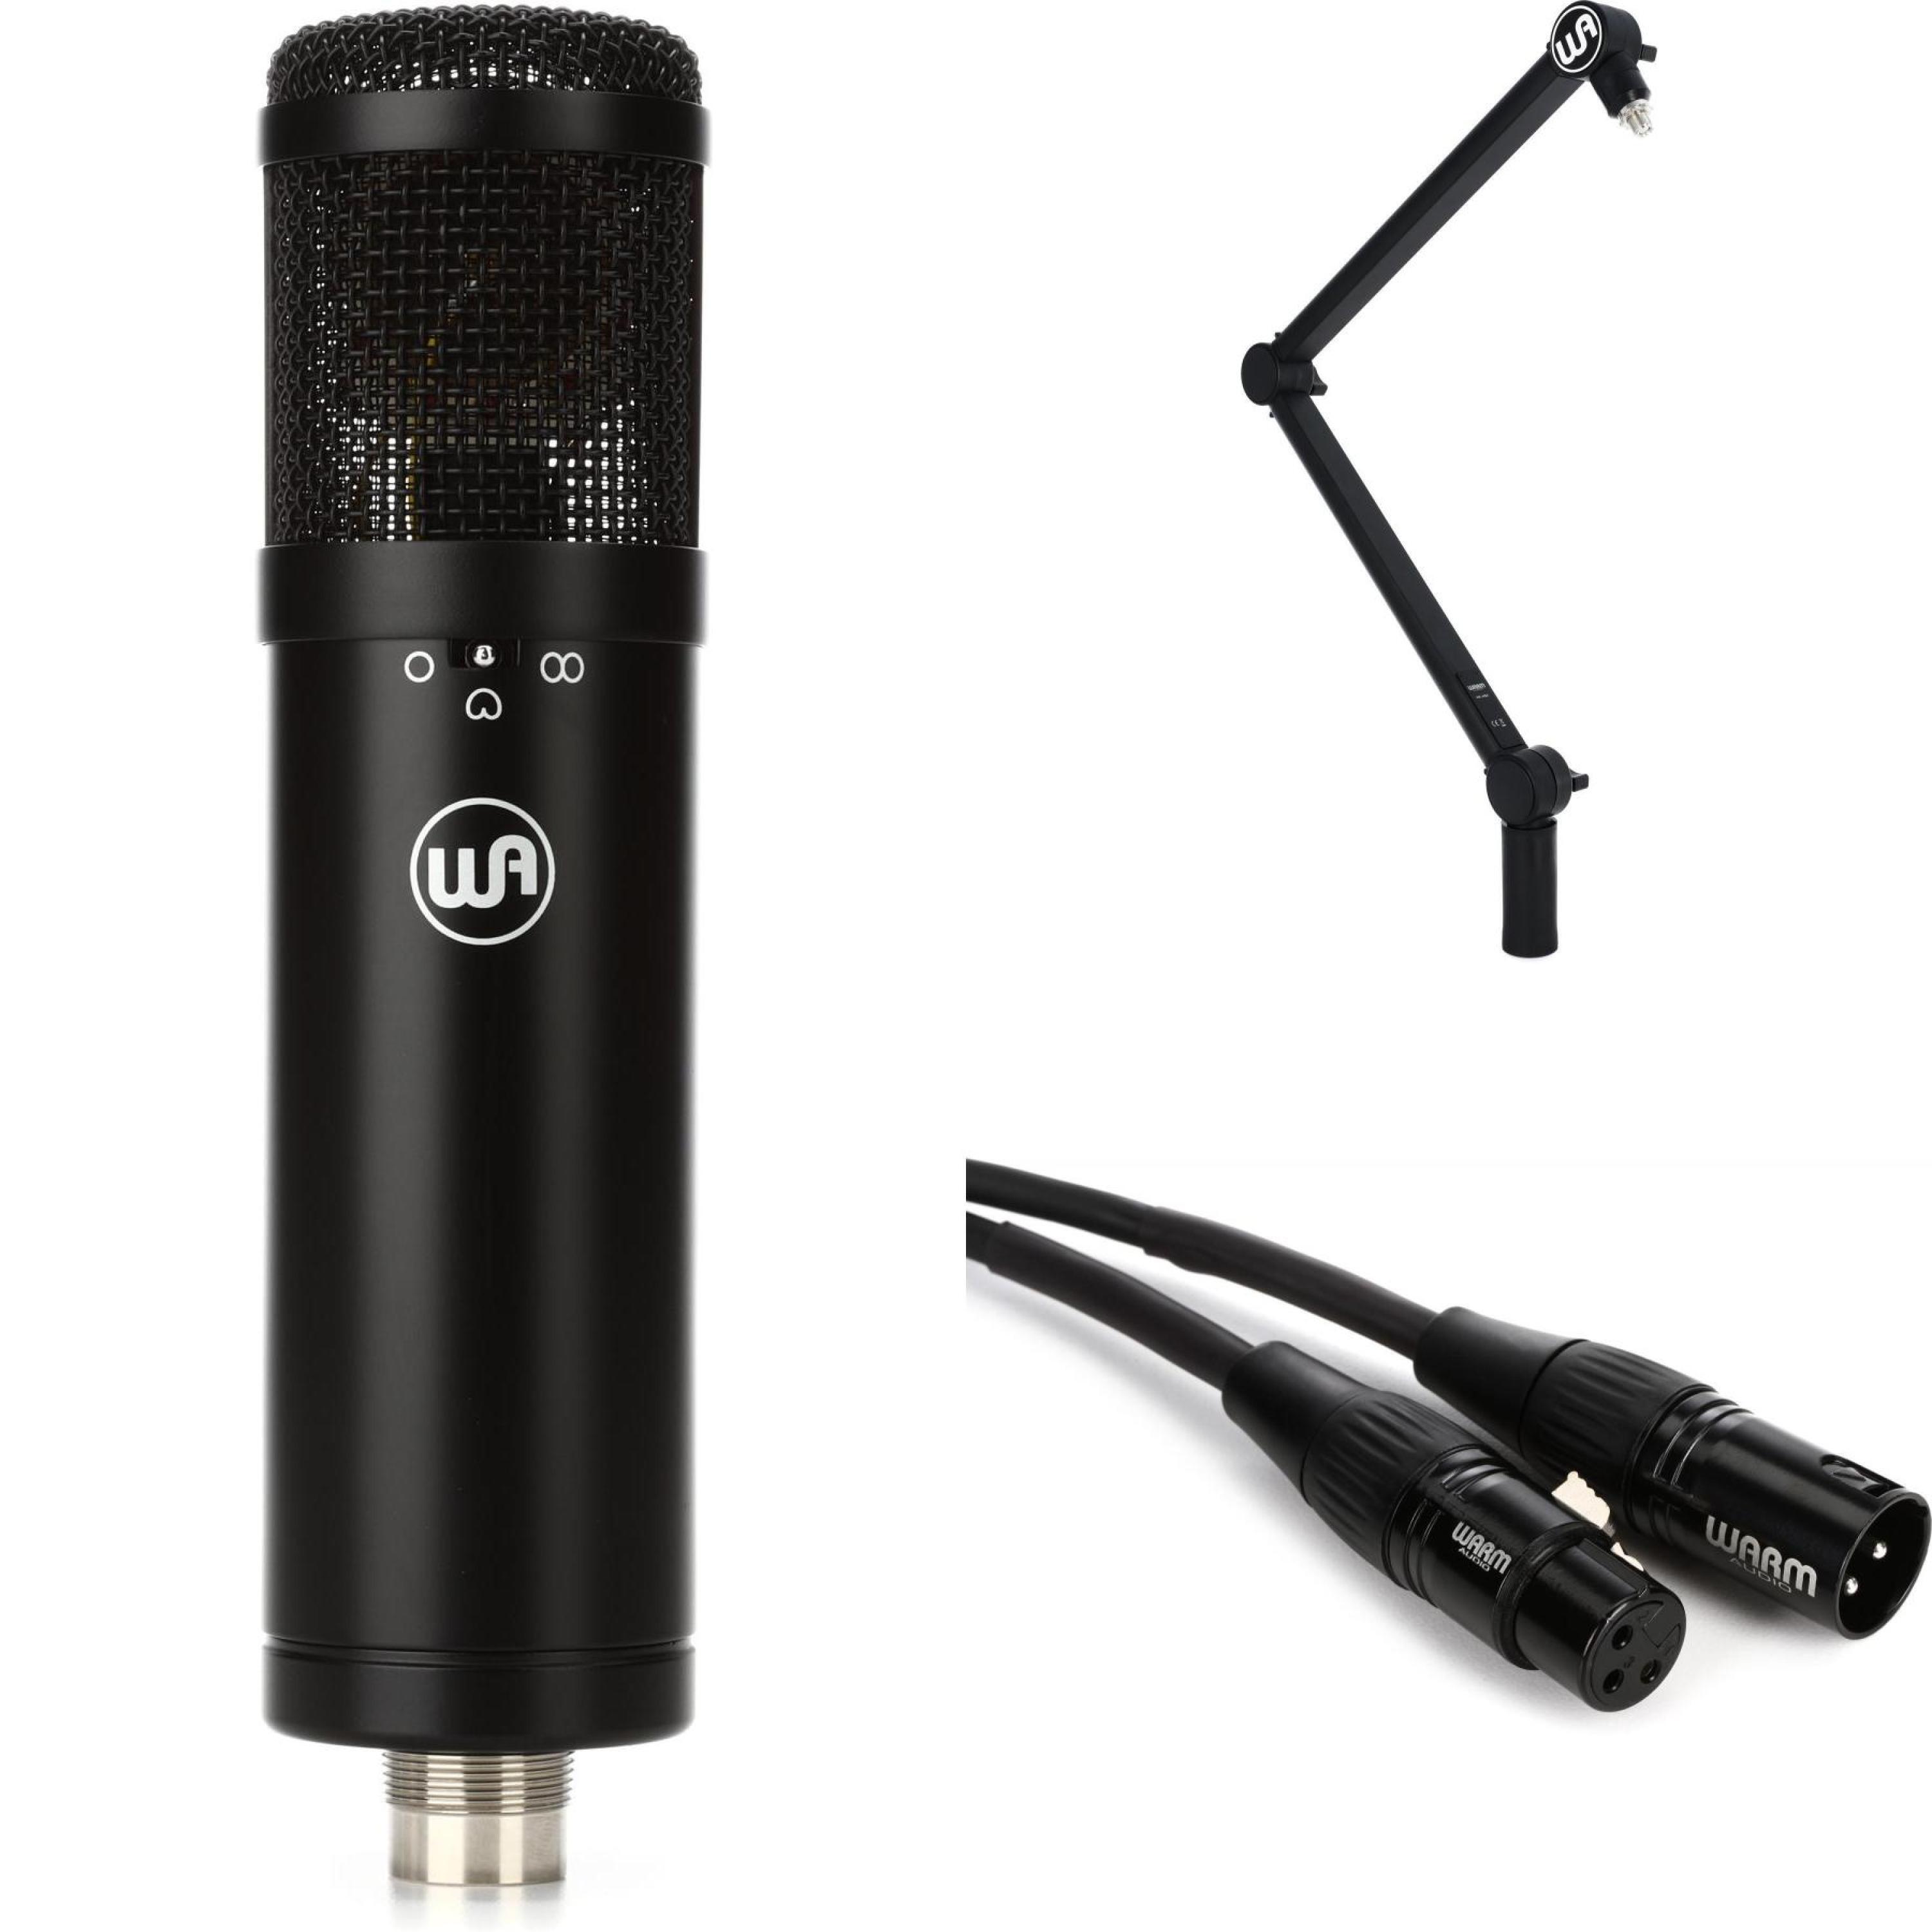 Warm Audio Microphone Boom Arm WA-MBA - Best Buy